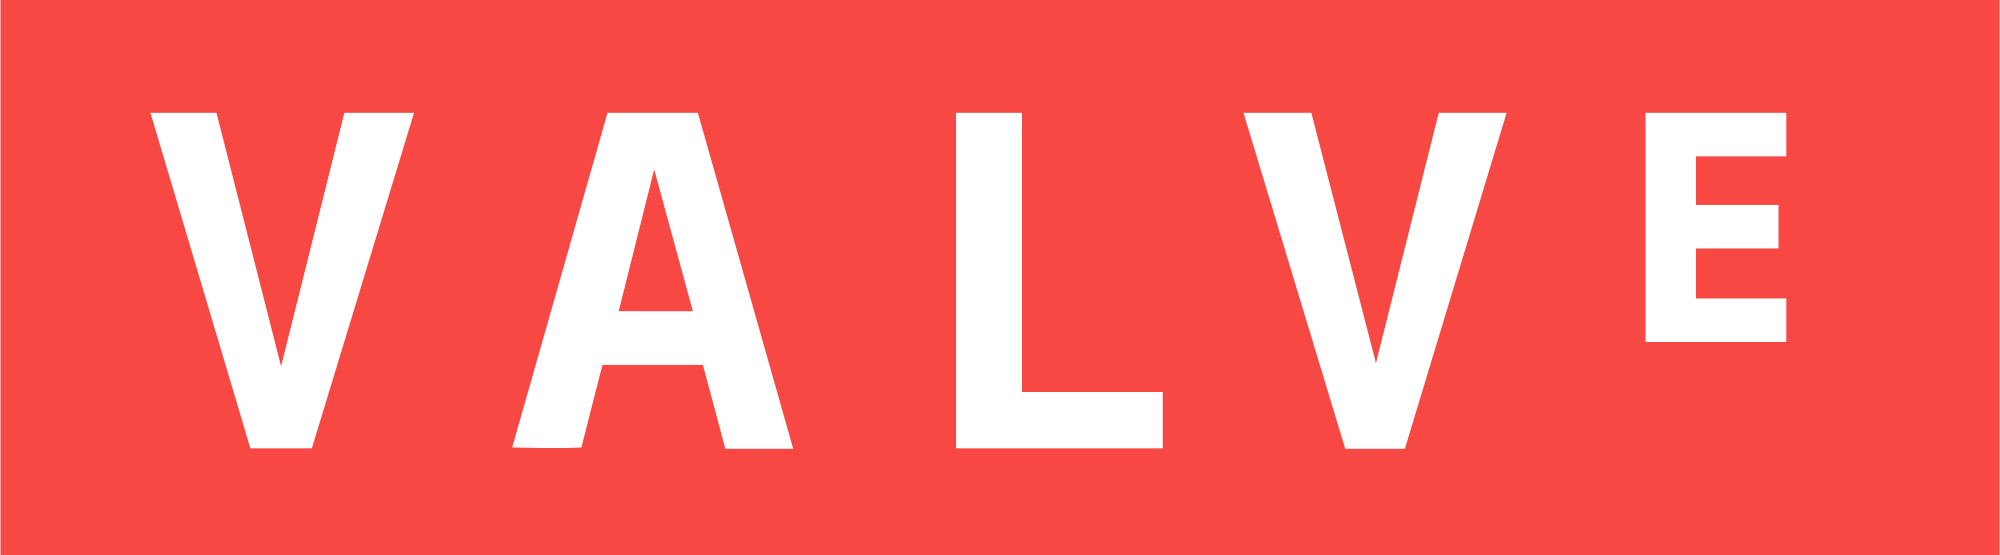 Valve Logo - File:Valve logo.svg - Wikimedia Commons